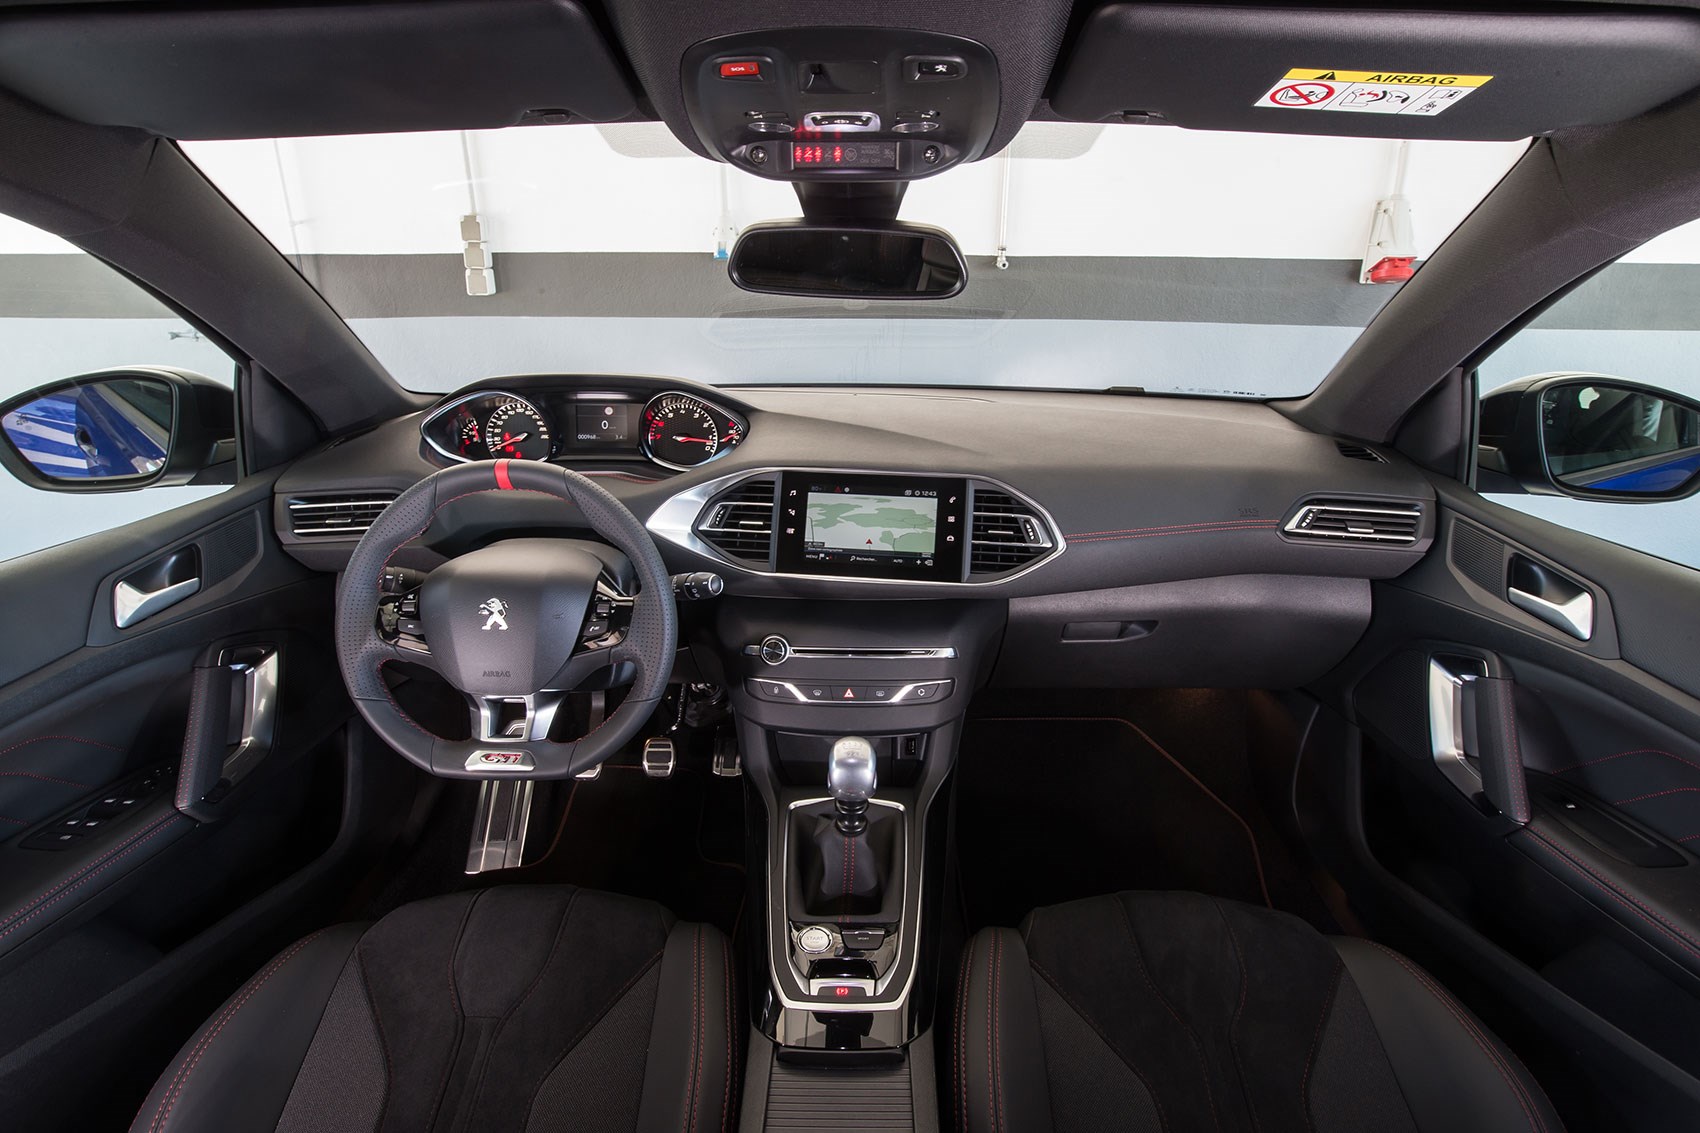 2017 Peugeot 308 GTI interior and cabin